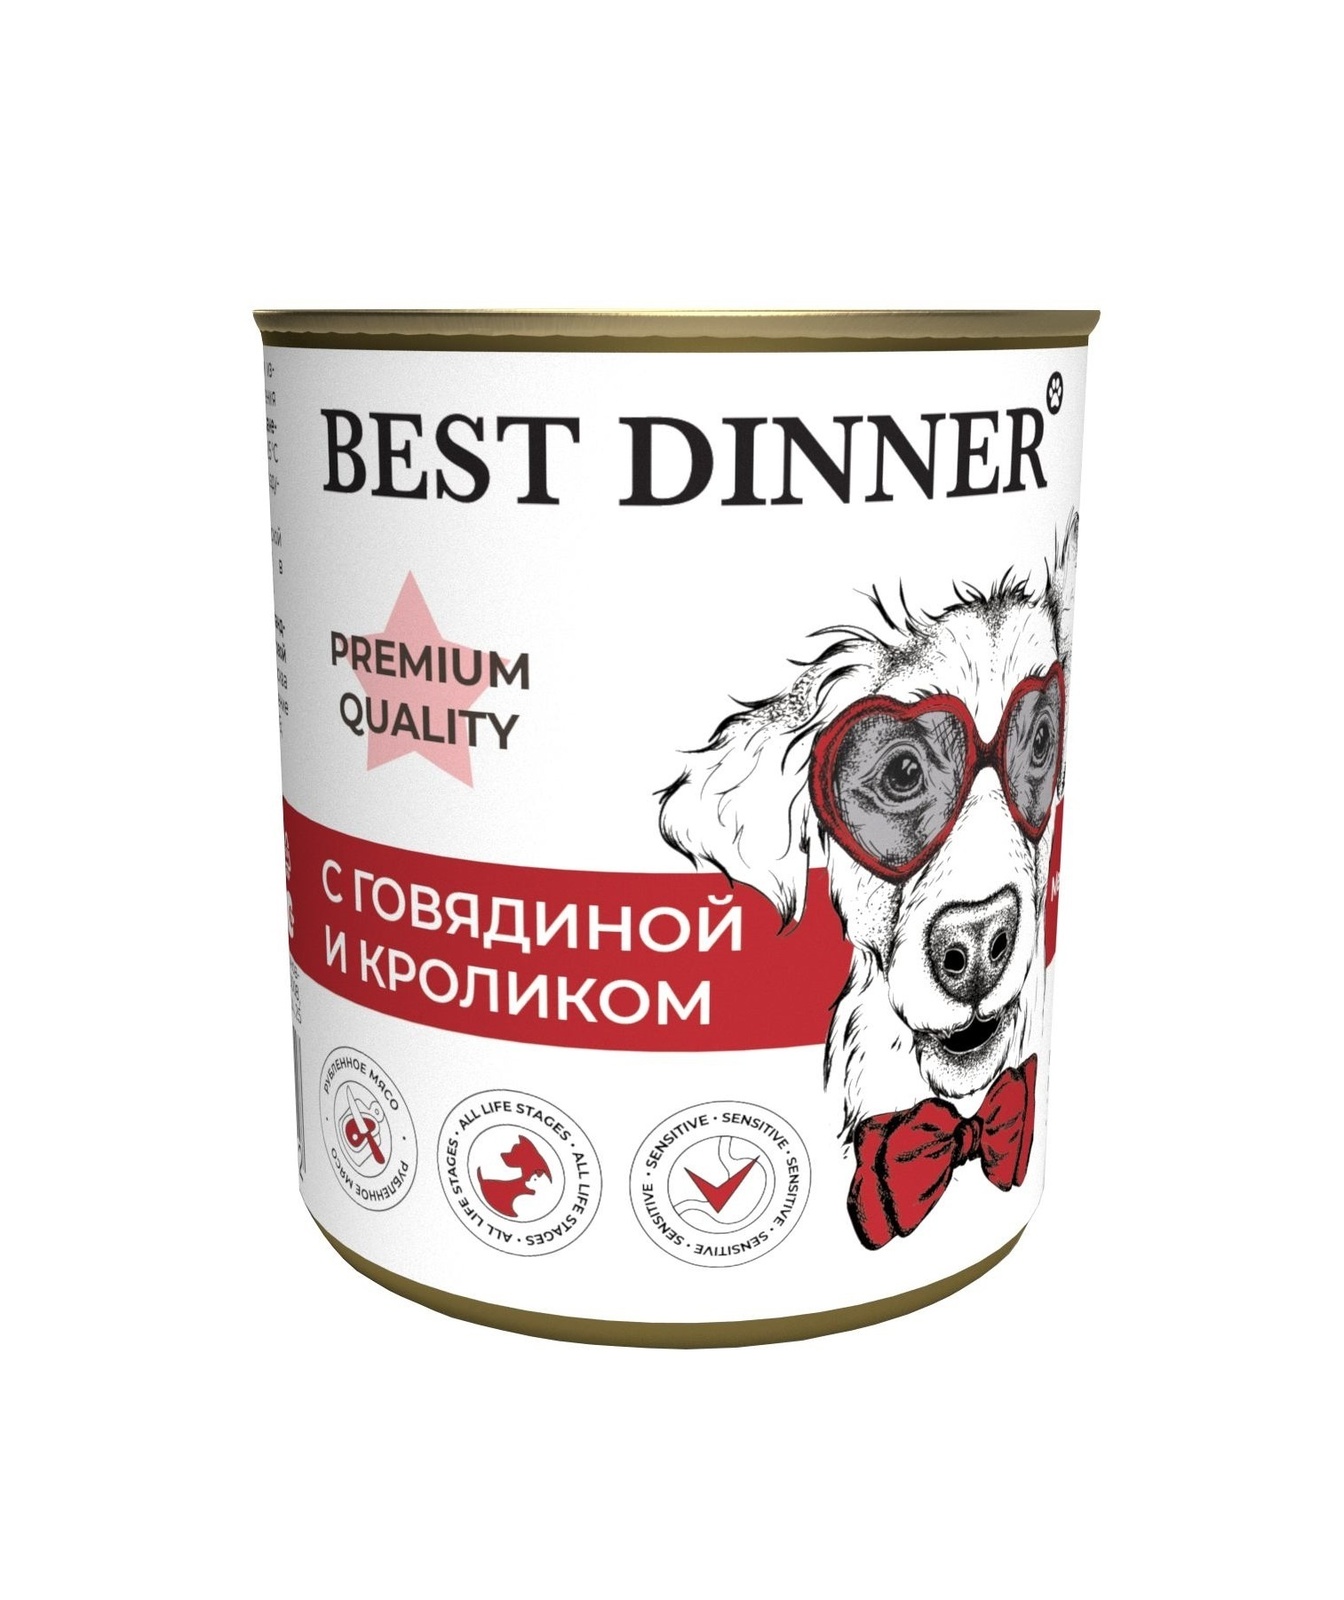 Best Dinner Best Dinner консервы Premium меню №3 С говядиной и кроликом (340 г) best dinner best dinner консервы premium меню 4 с телятиной и овощами 340 г